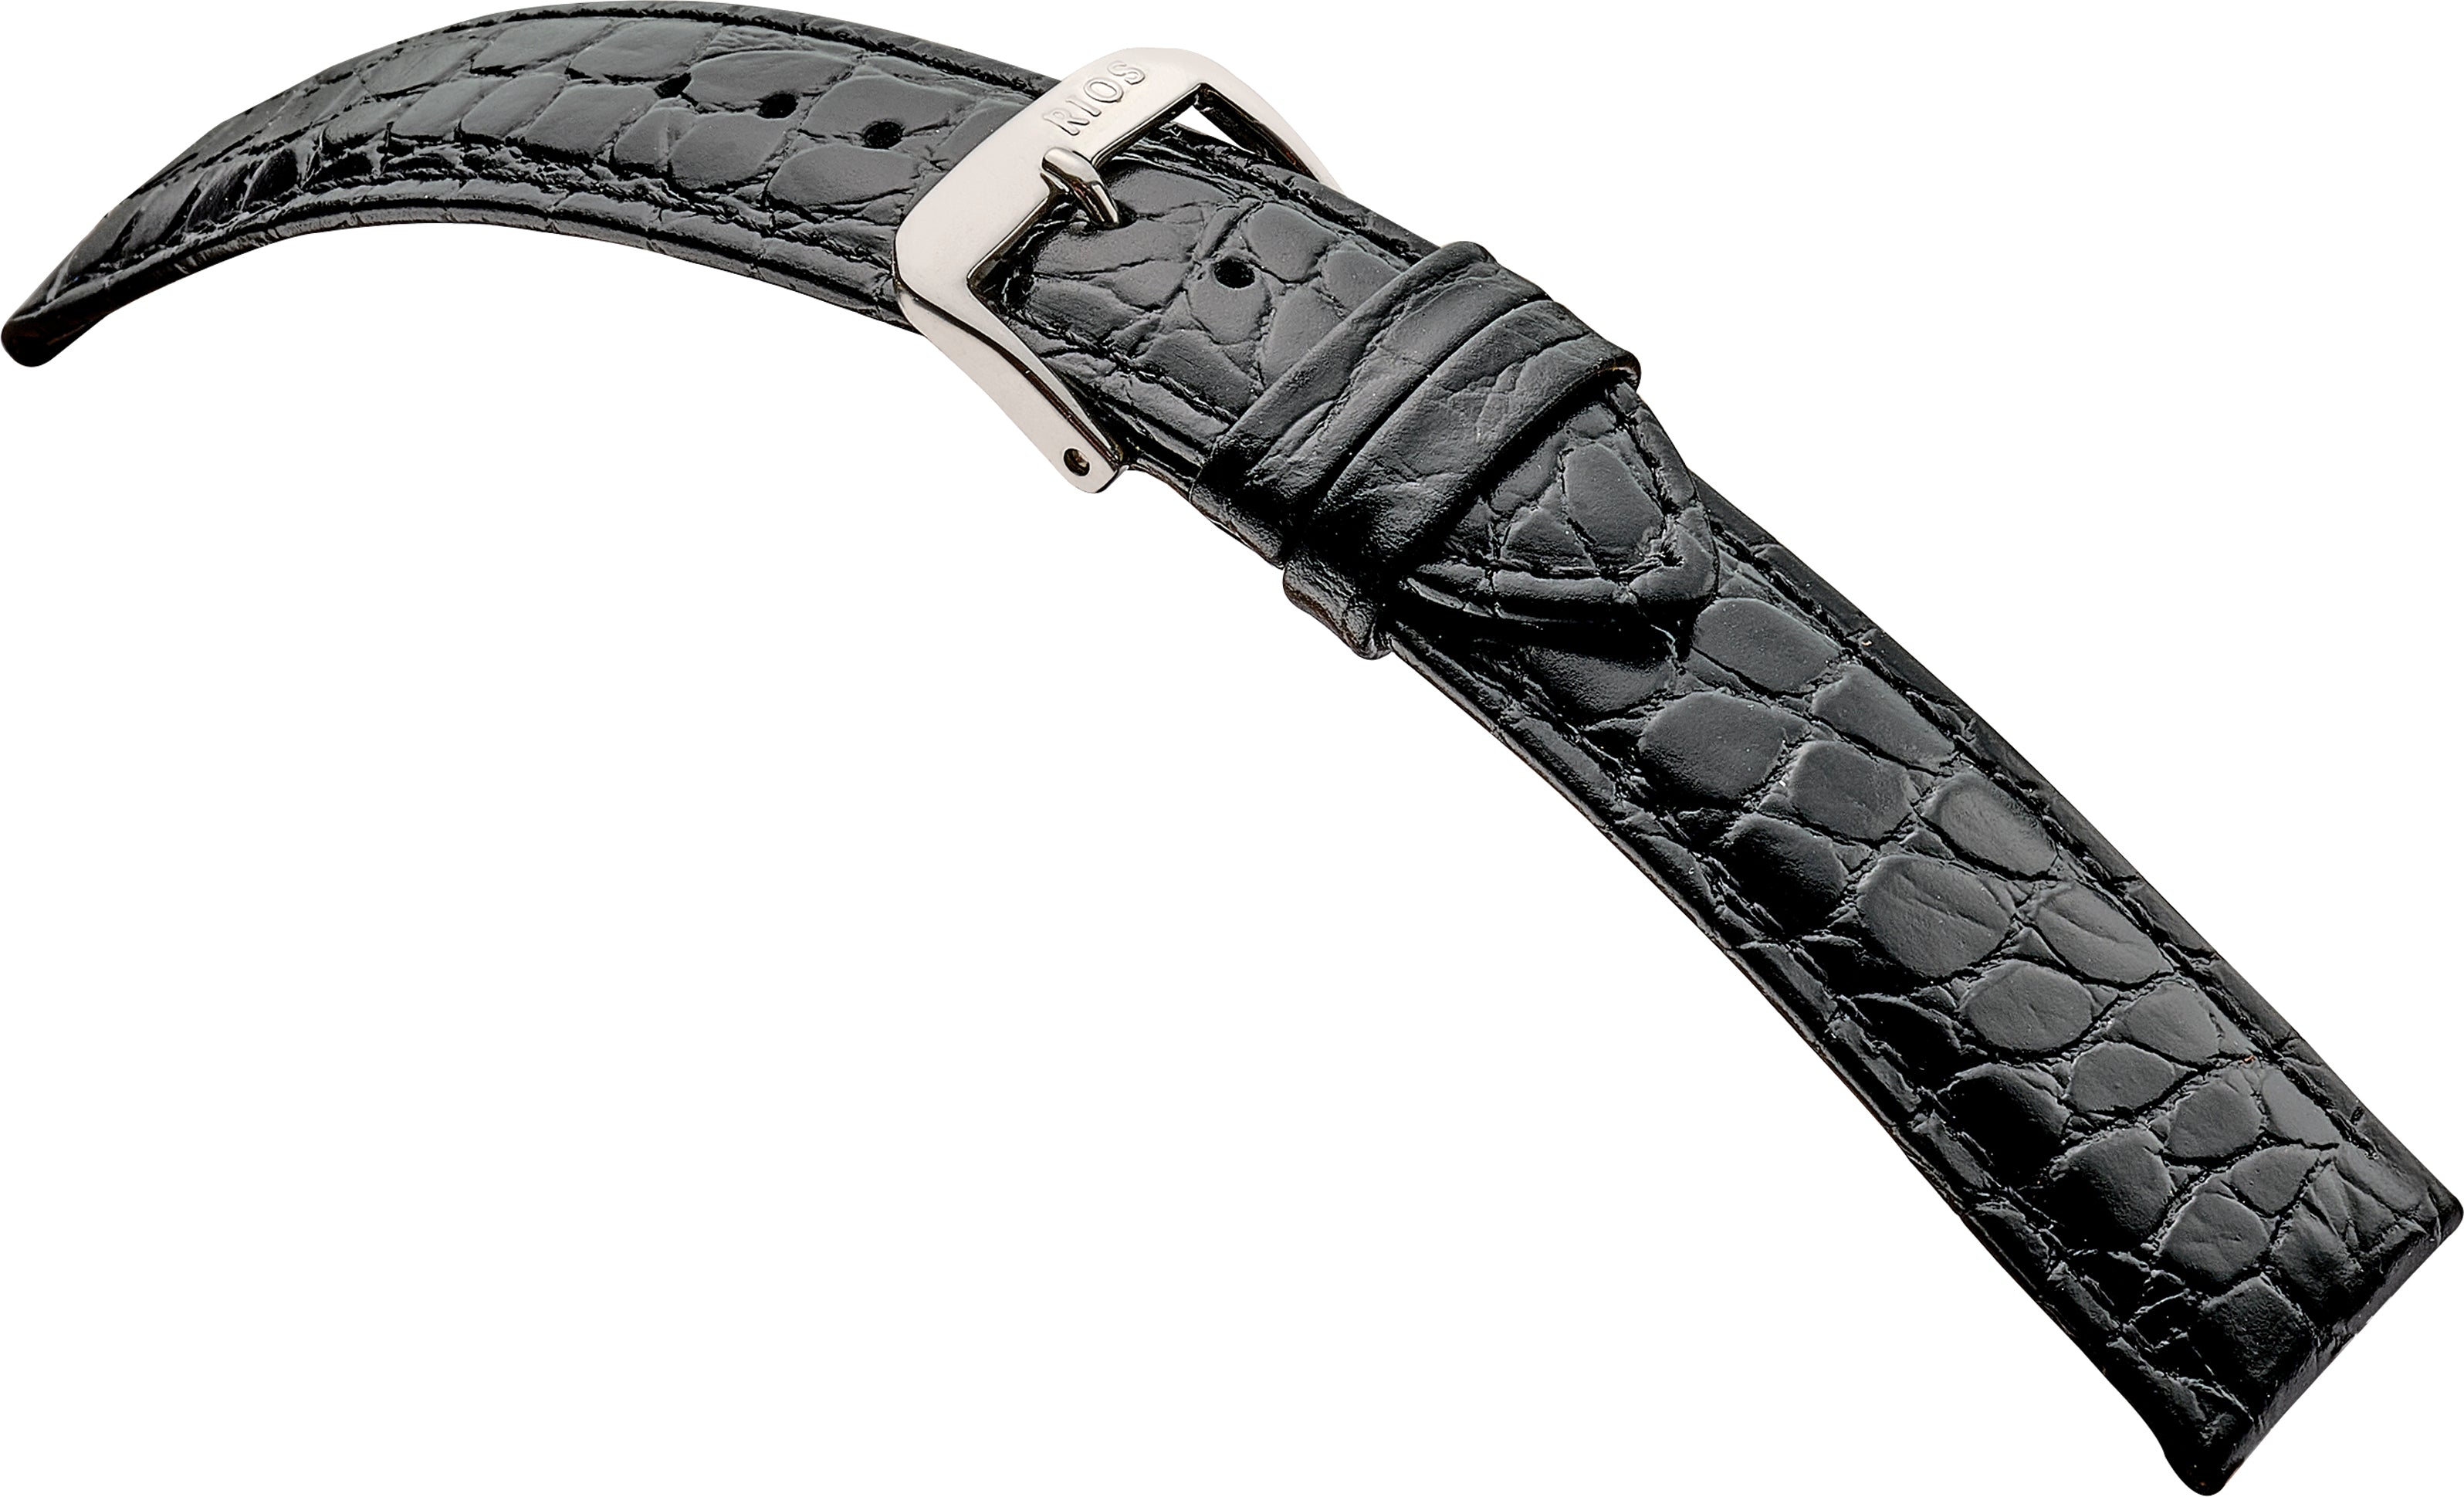 R249 HERITAGE watch strap